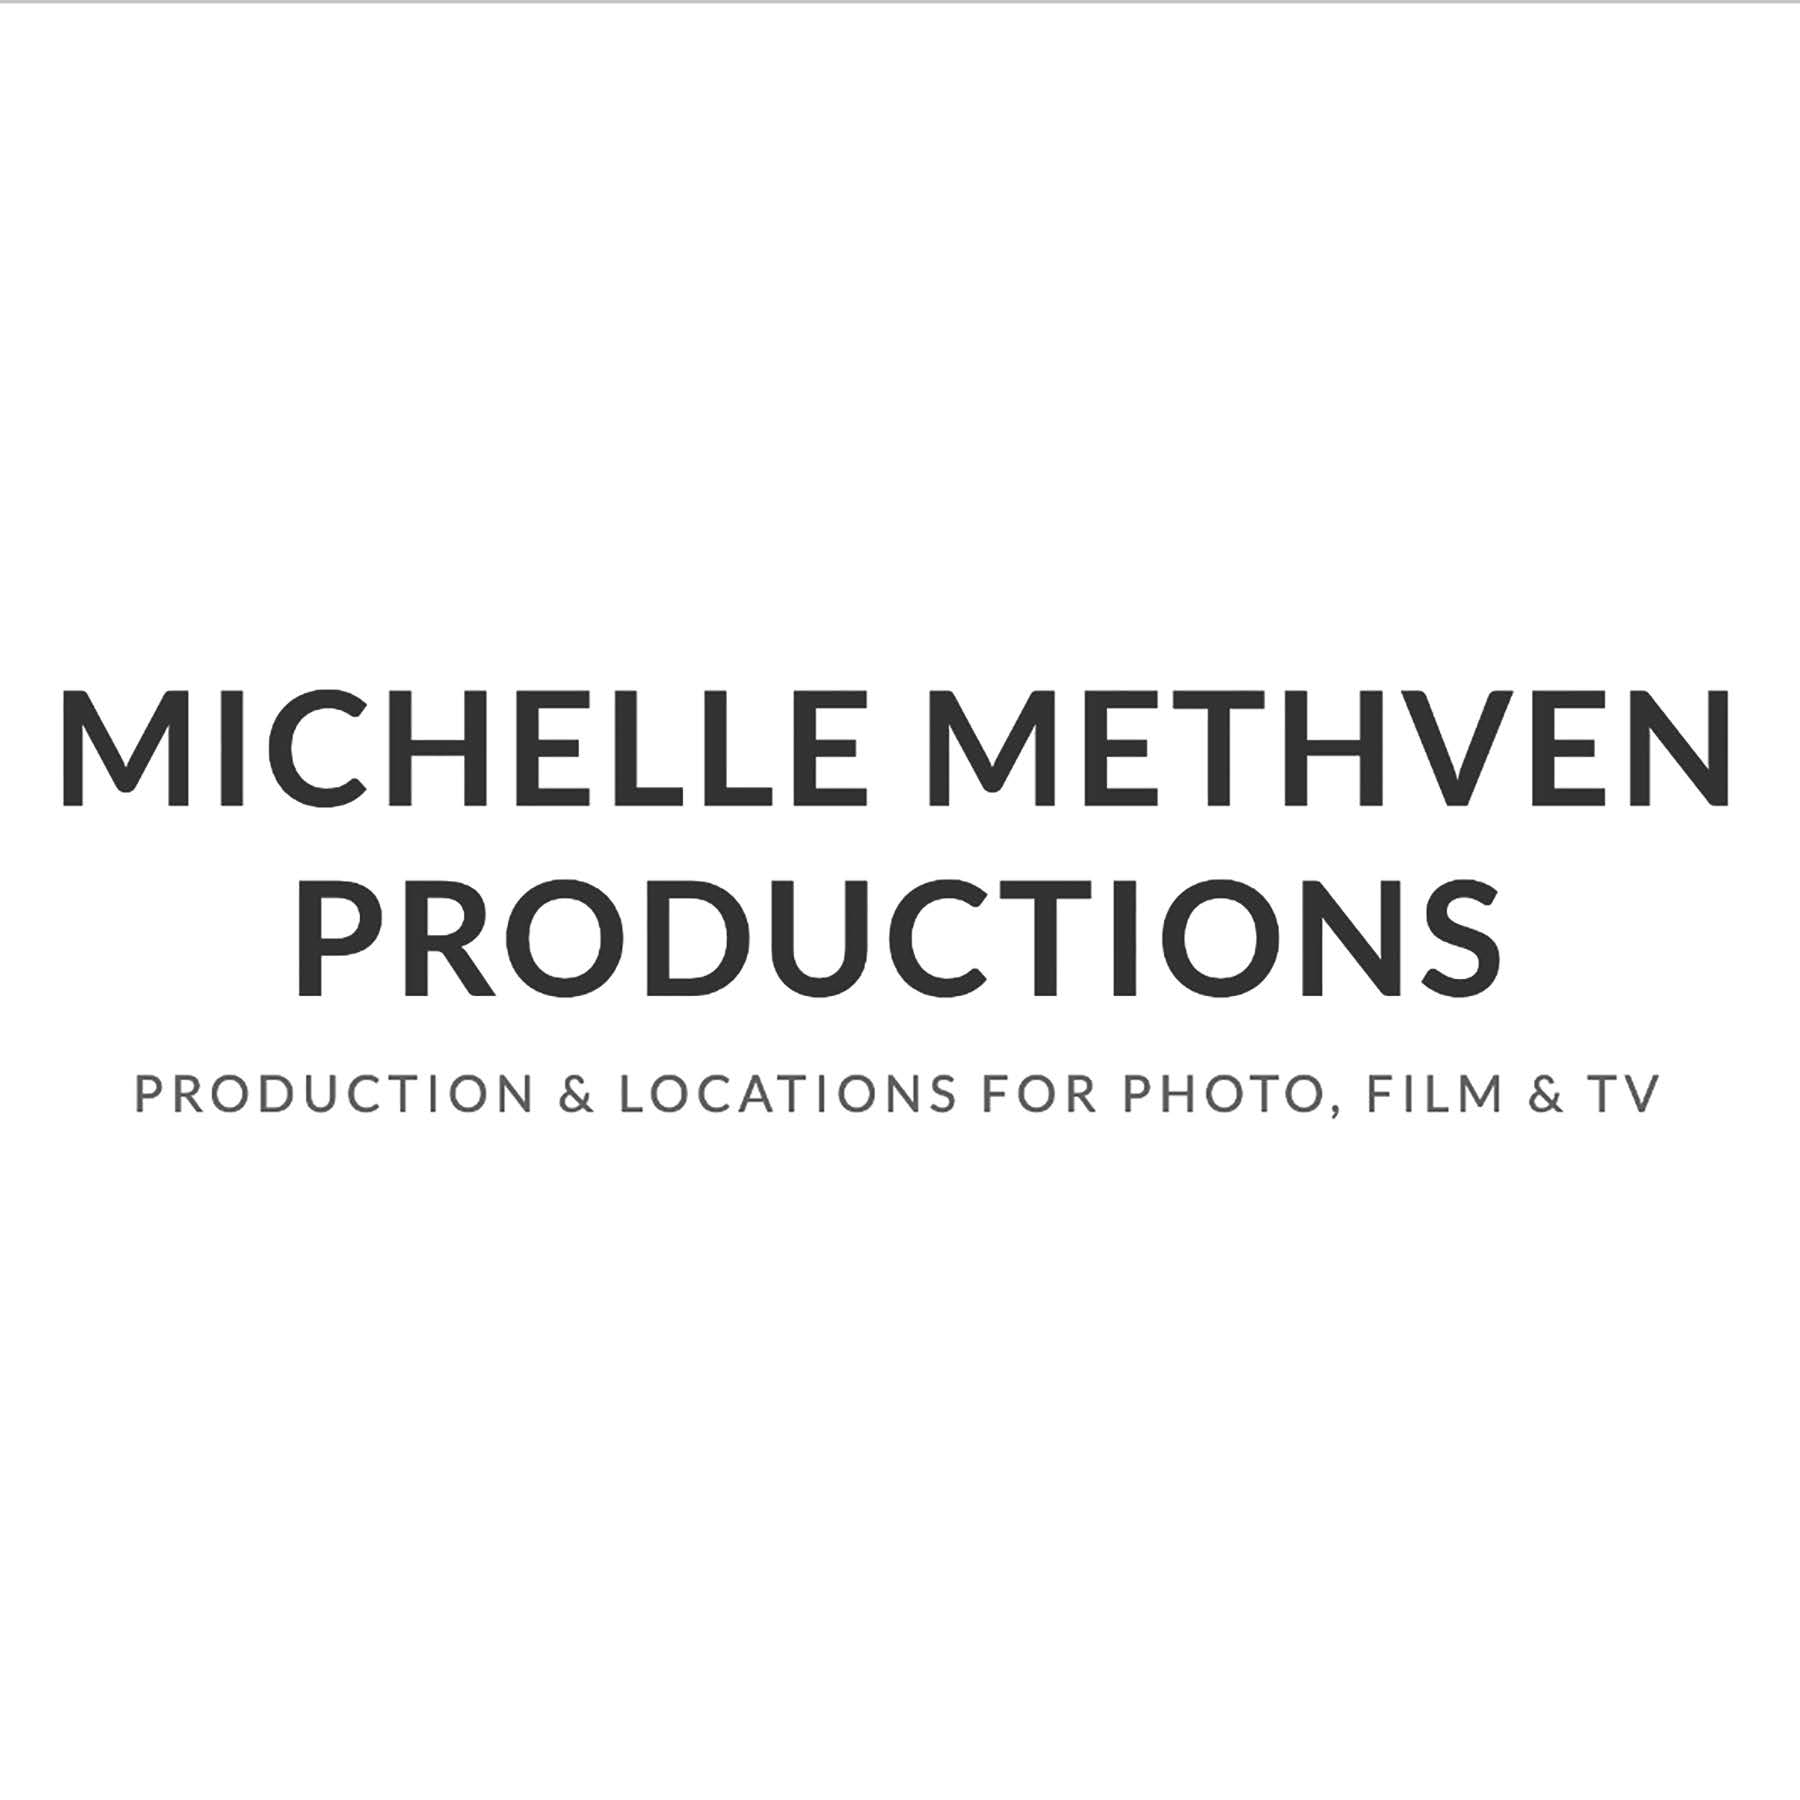 Michelle Methven Productions